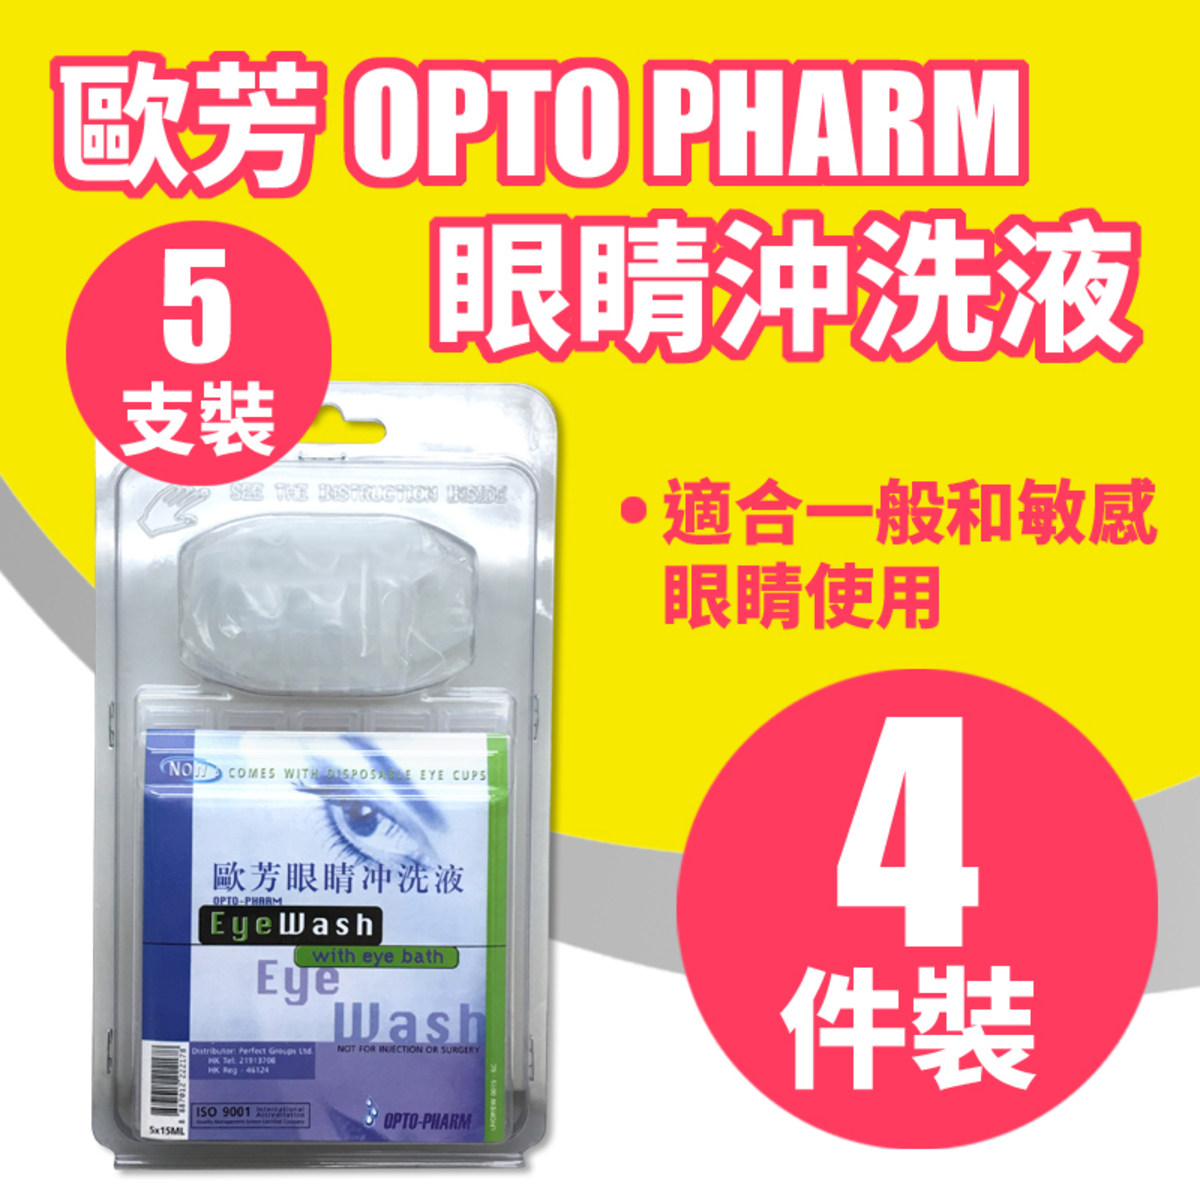 OPTO PHARM EyeWash with eye bath 5pcs x 4 sets